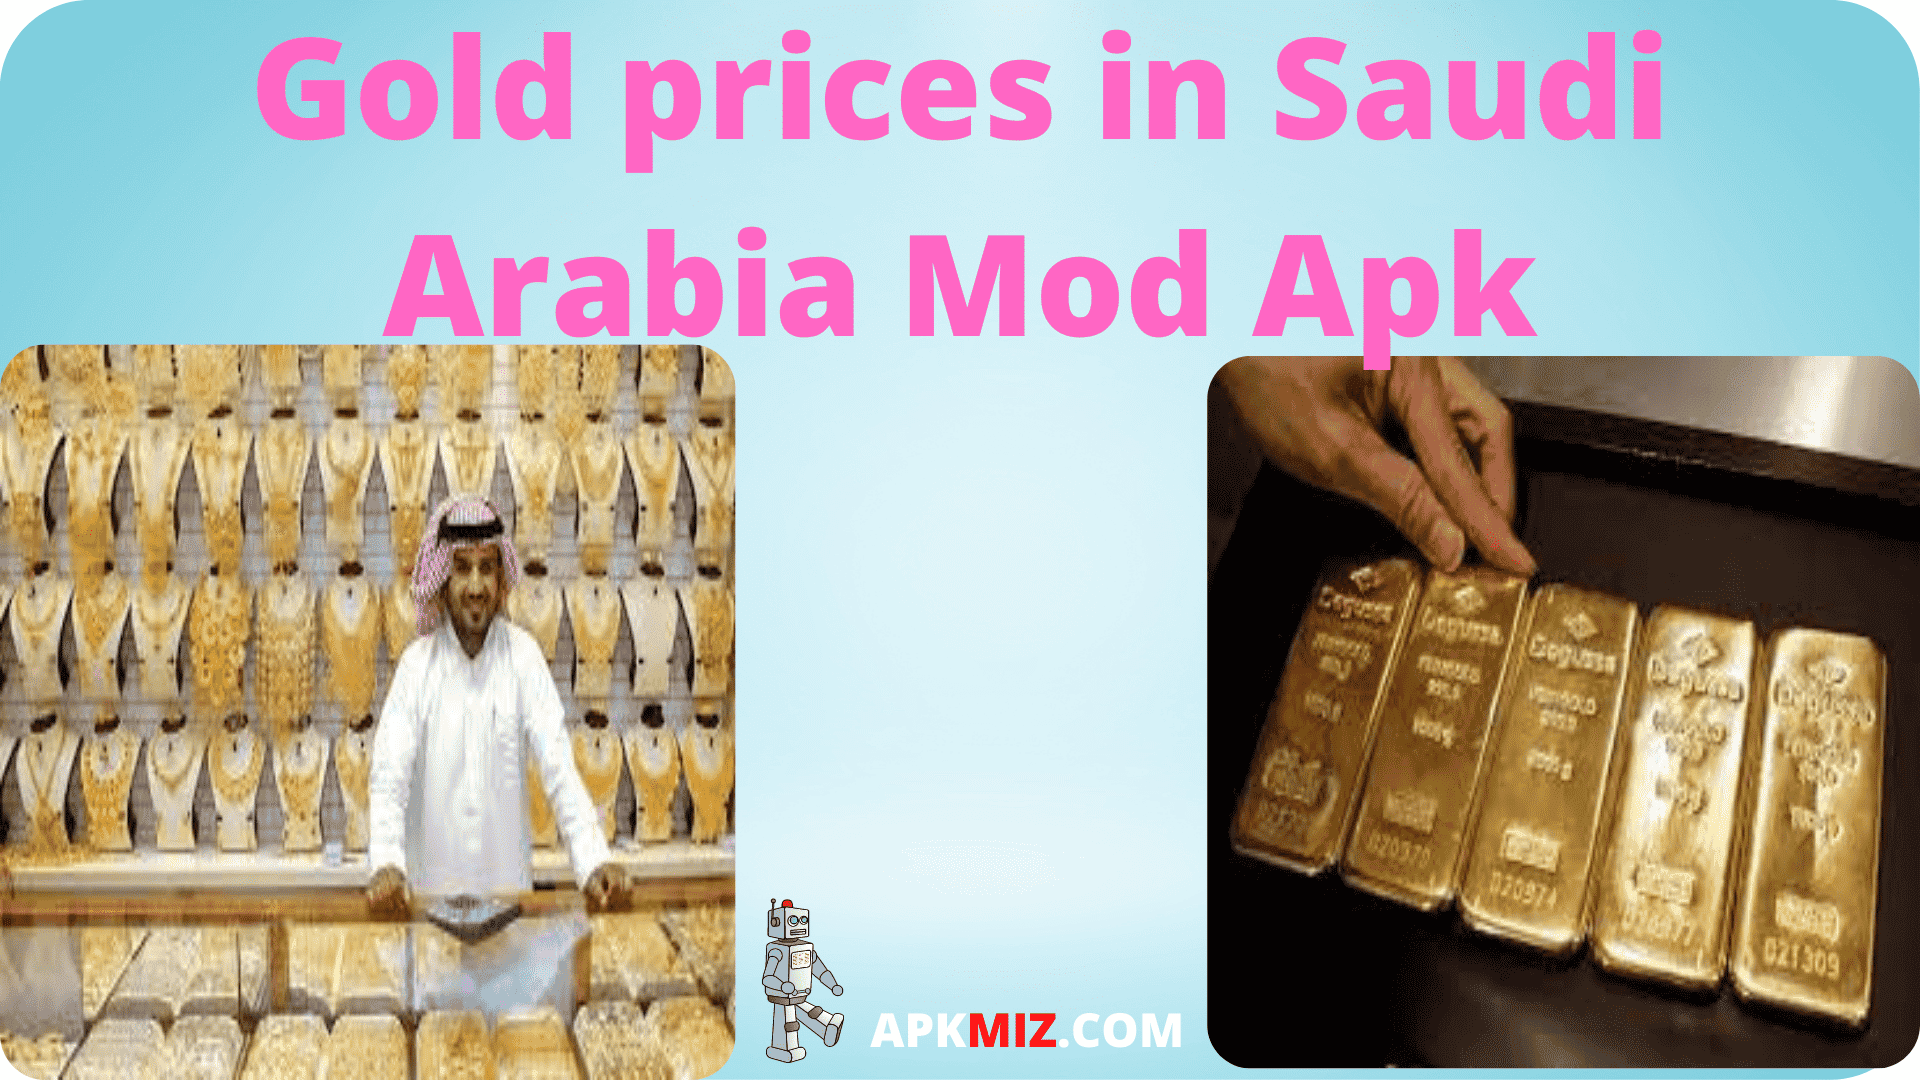 Gold prices in Saudi Arabia Mod Apk